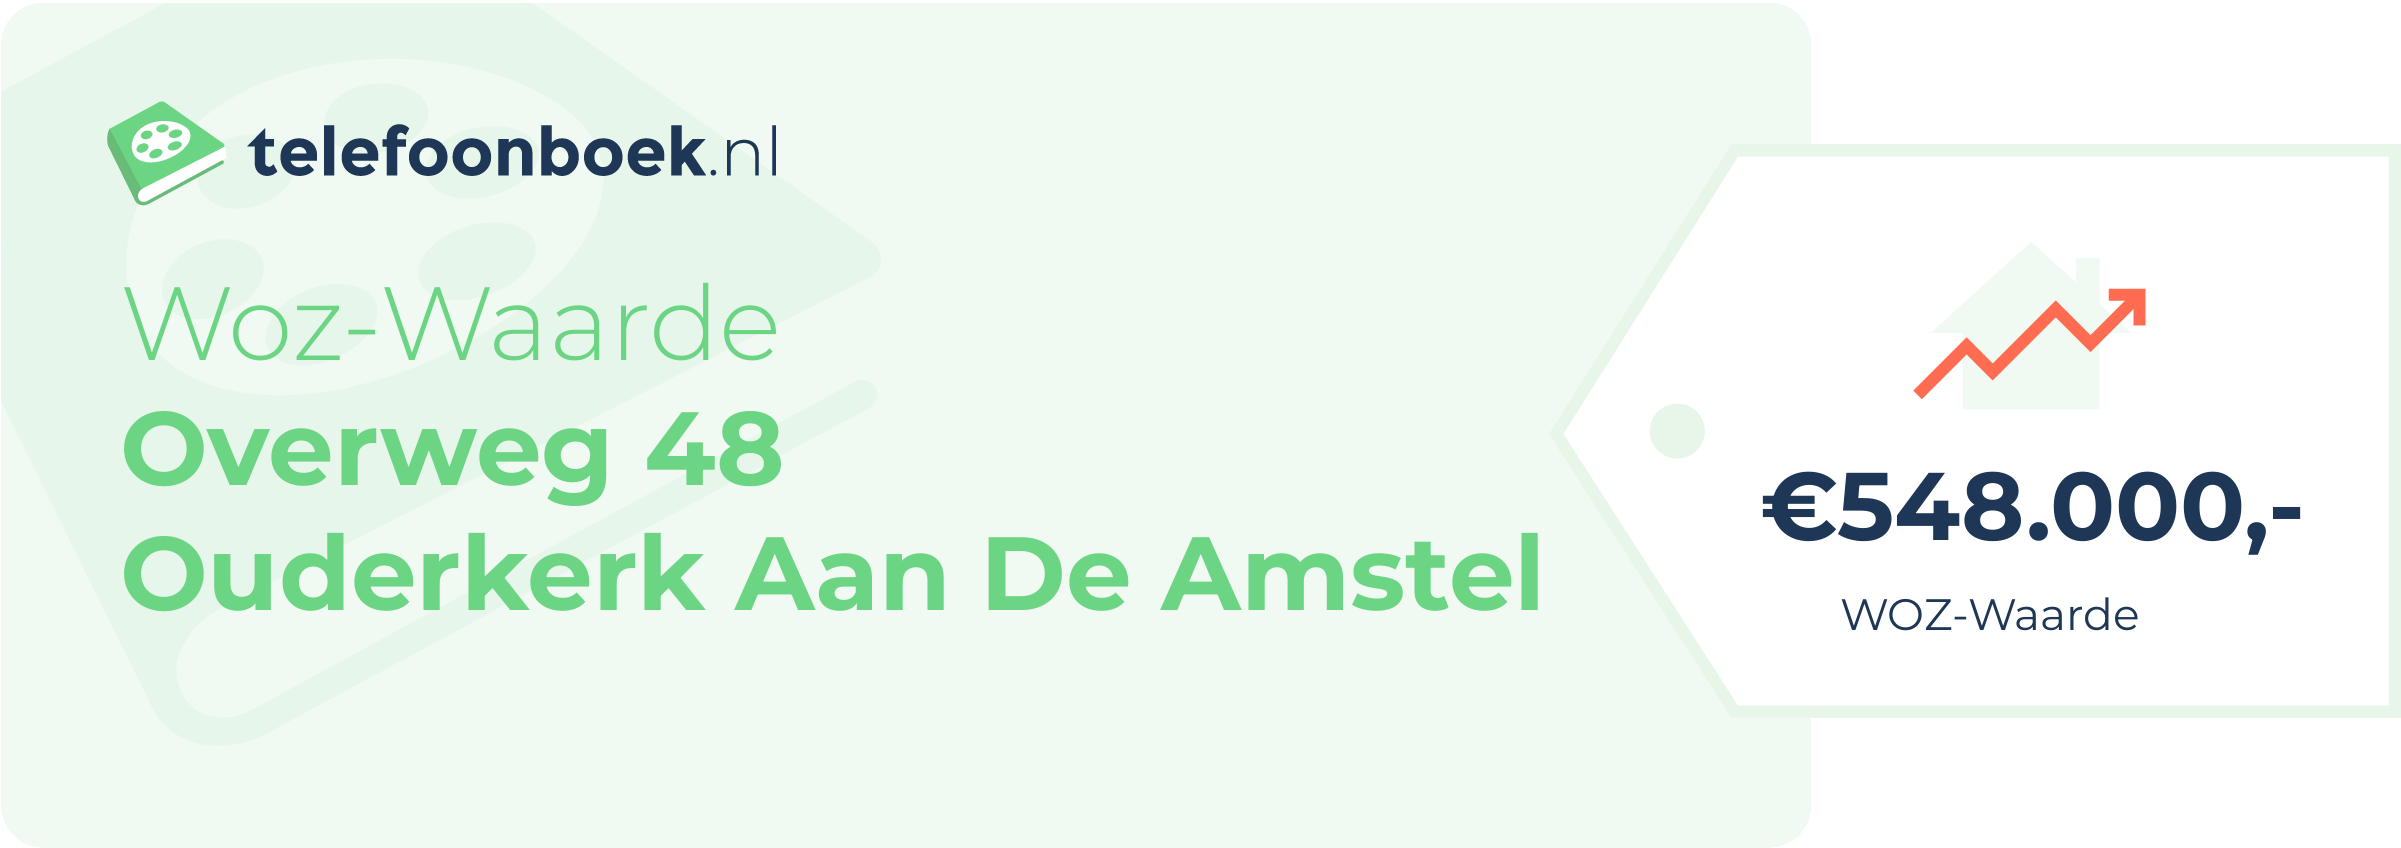 WOZ-waarde Overweg 48 Ouderkerk Aan De Amstel